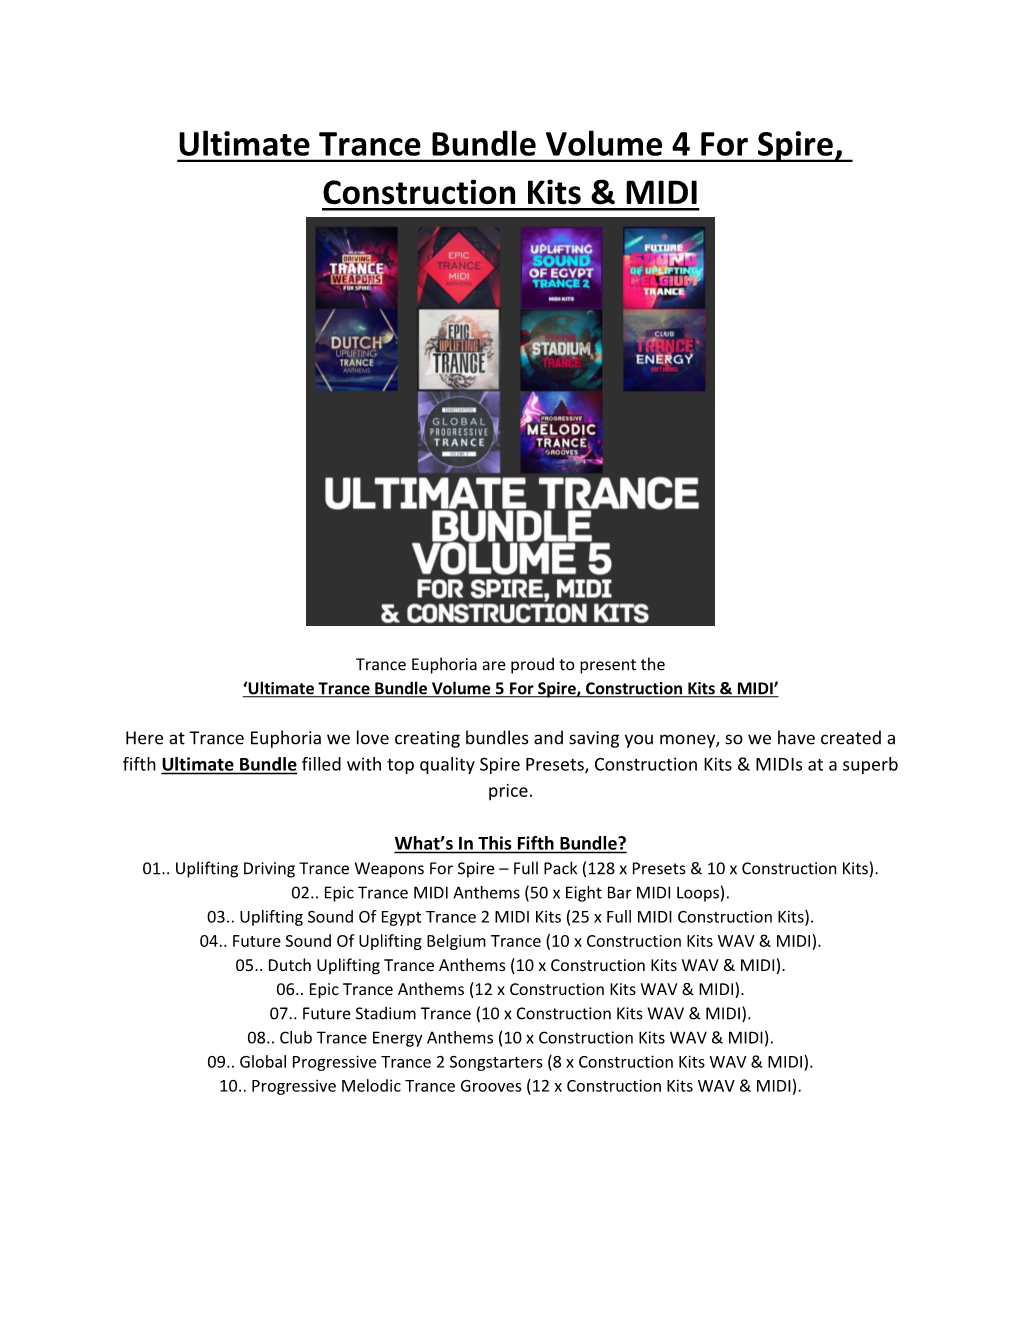 Ultimate Trance Bundle Volume 4 for Spire, Construction Kits & MIDI